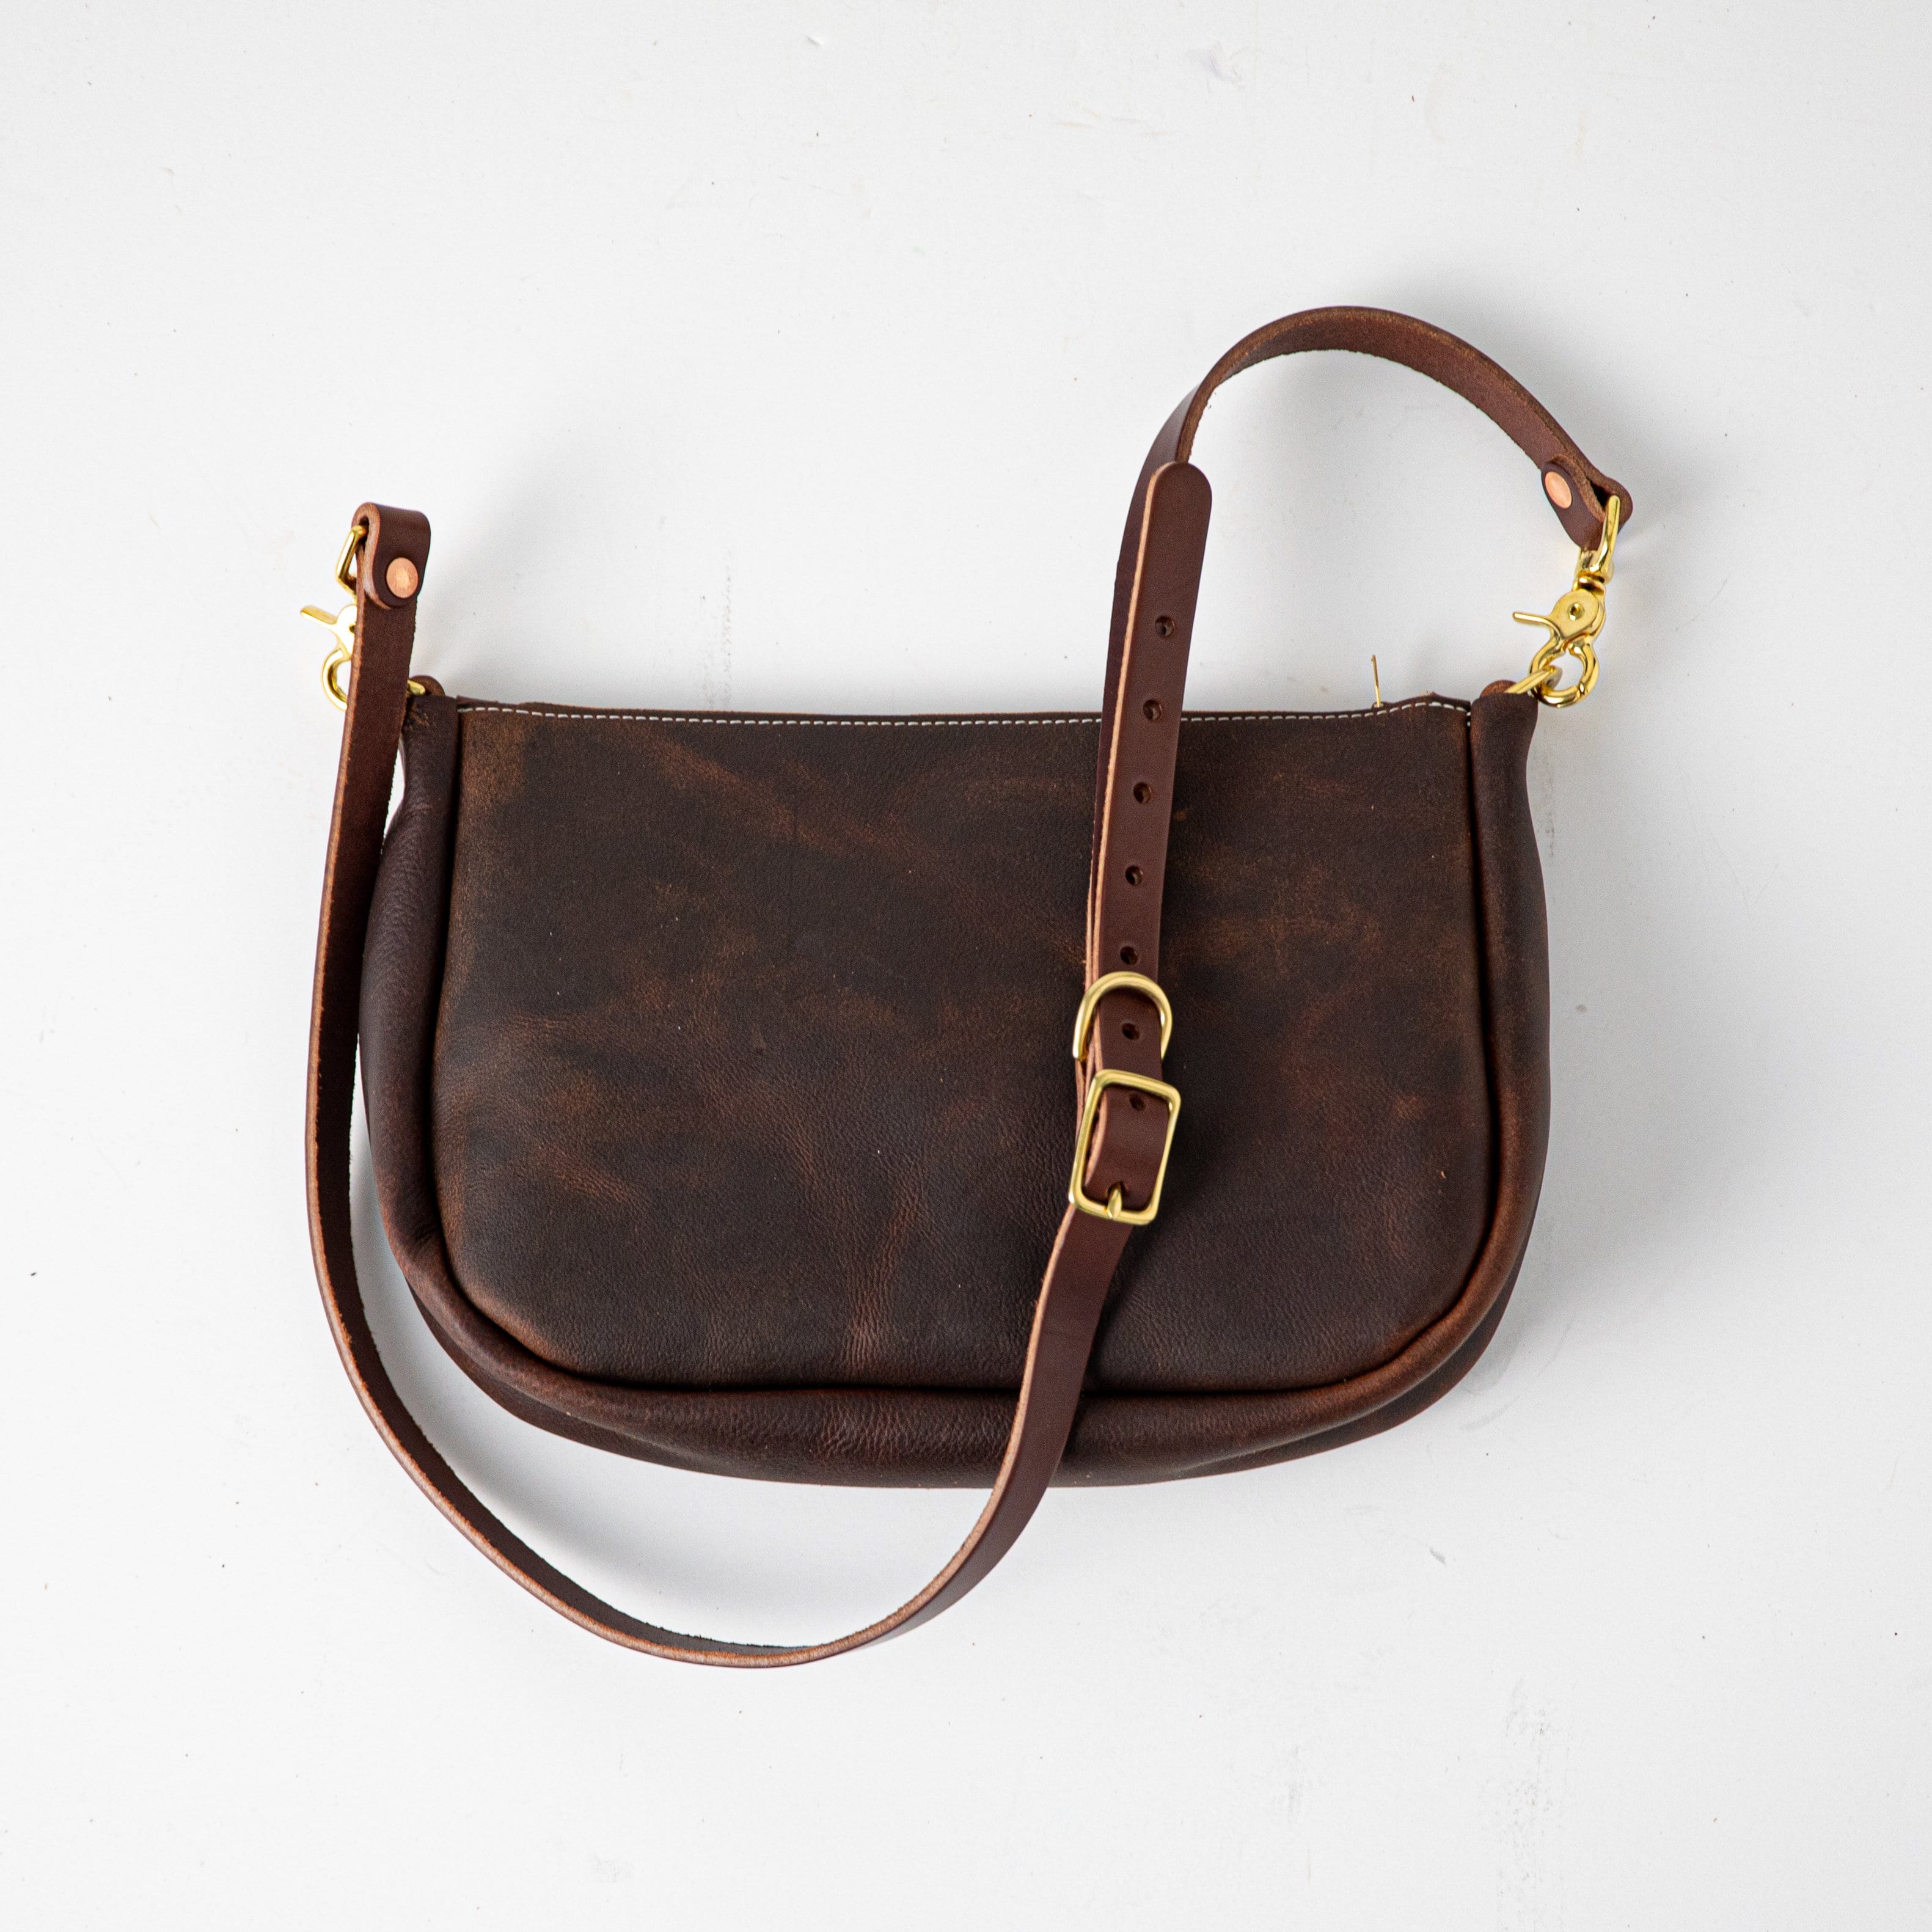 COACH Small Studio Signature Flap Bag in Brown